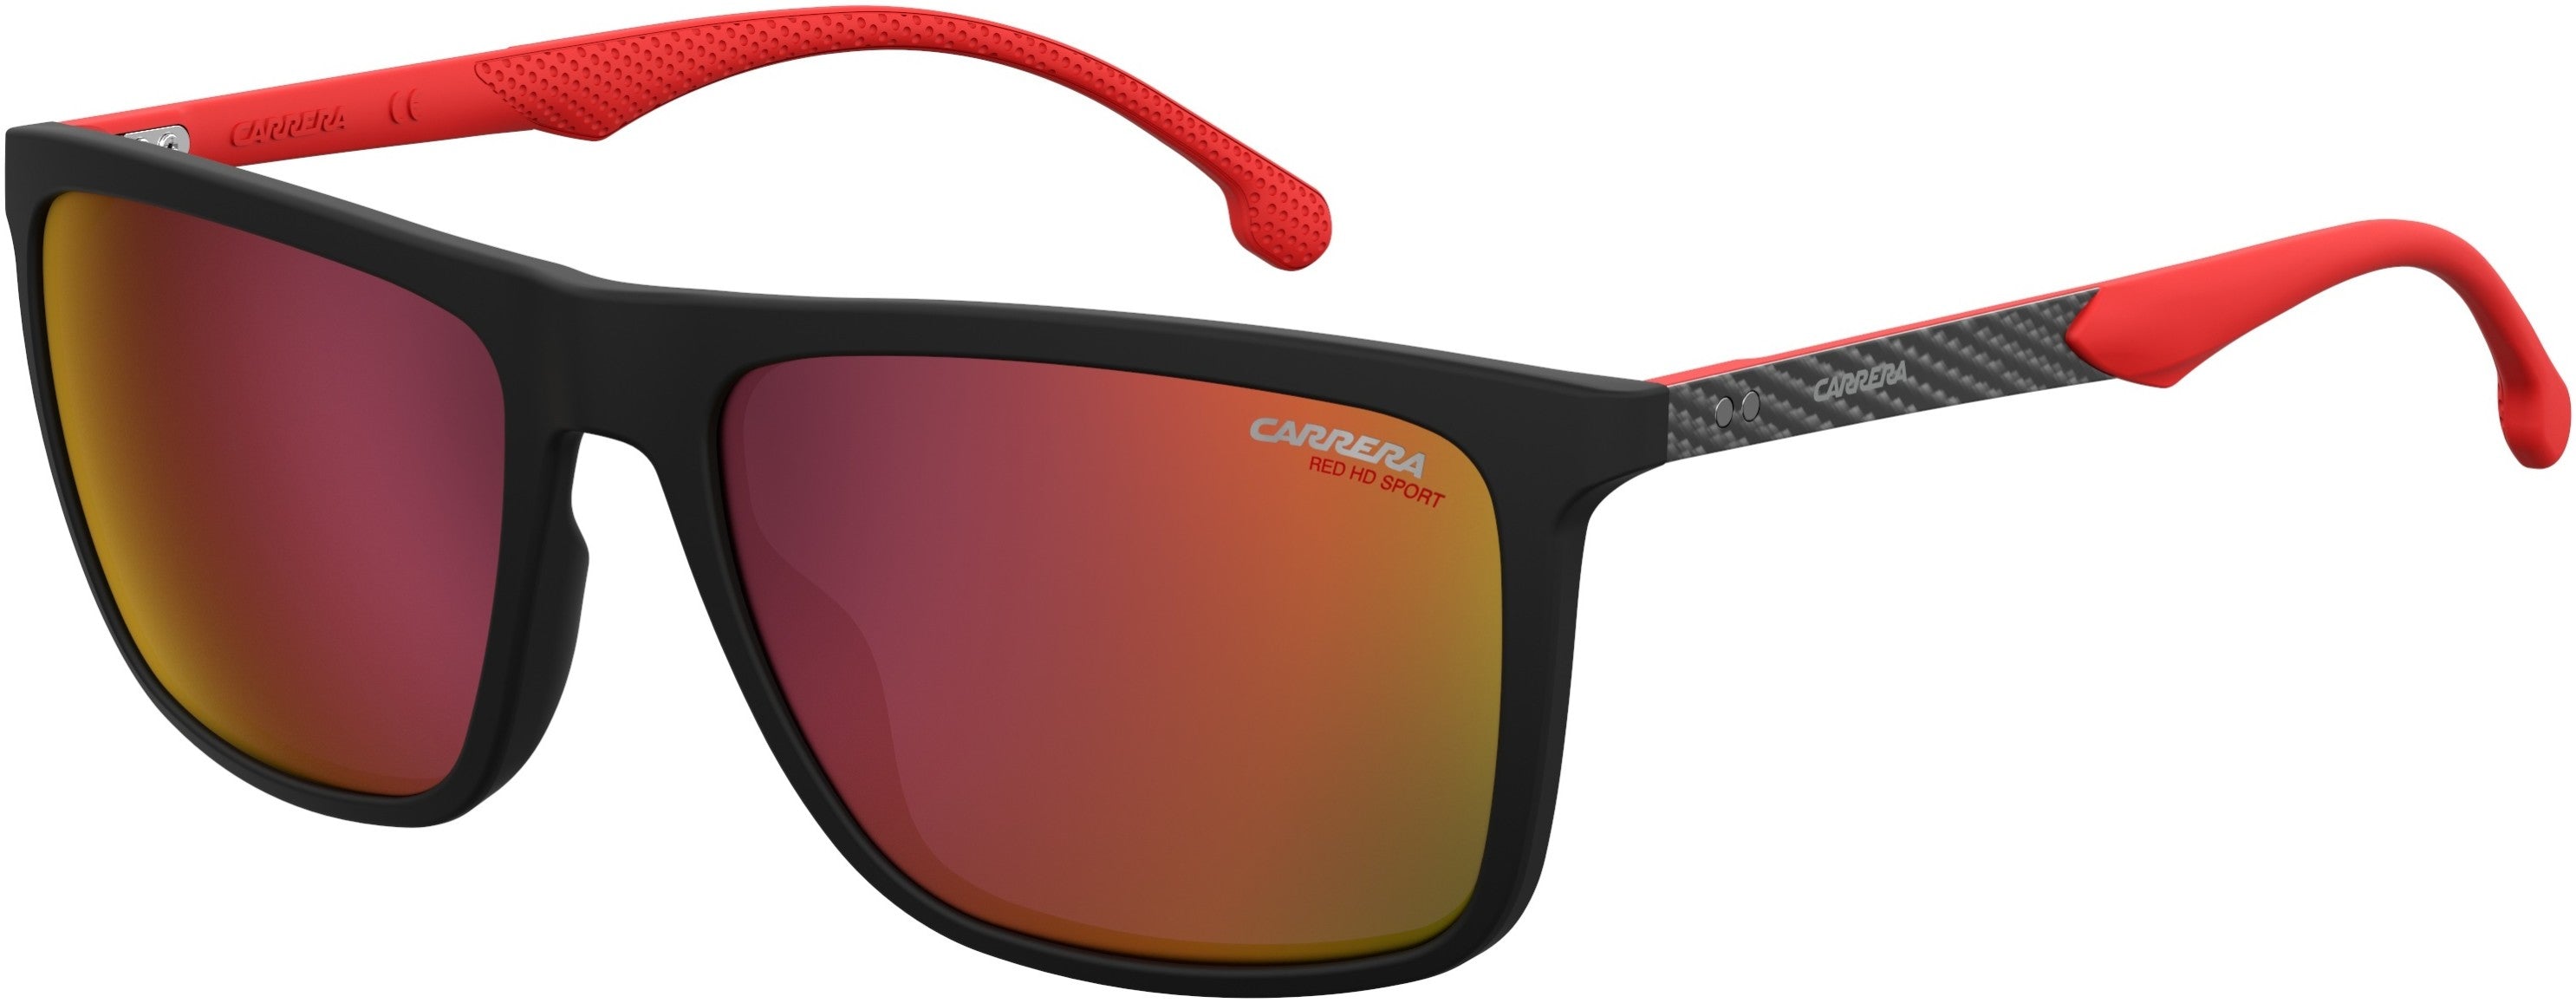  Carrera 8032/S Rectangular Sunglasses 0003-0003  Matte Black (W3 Red Hd Ml Ol)